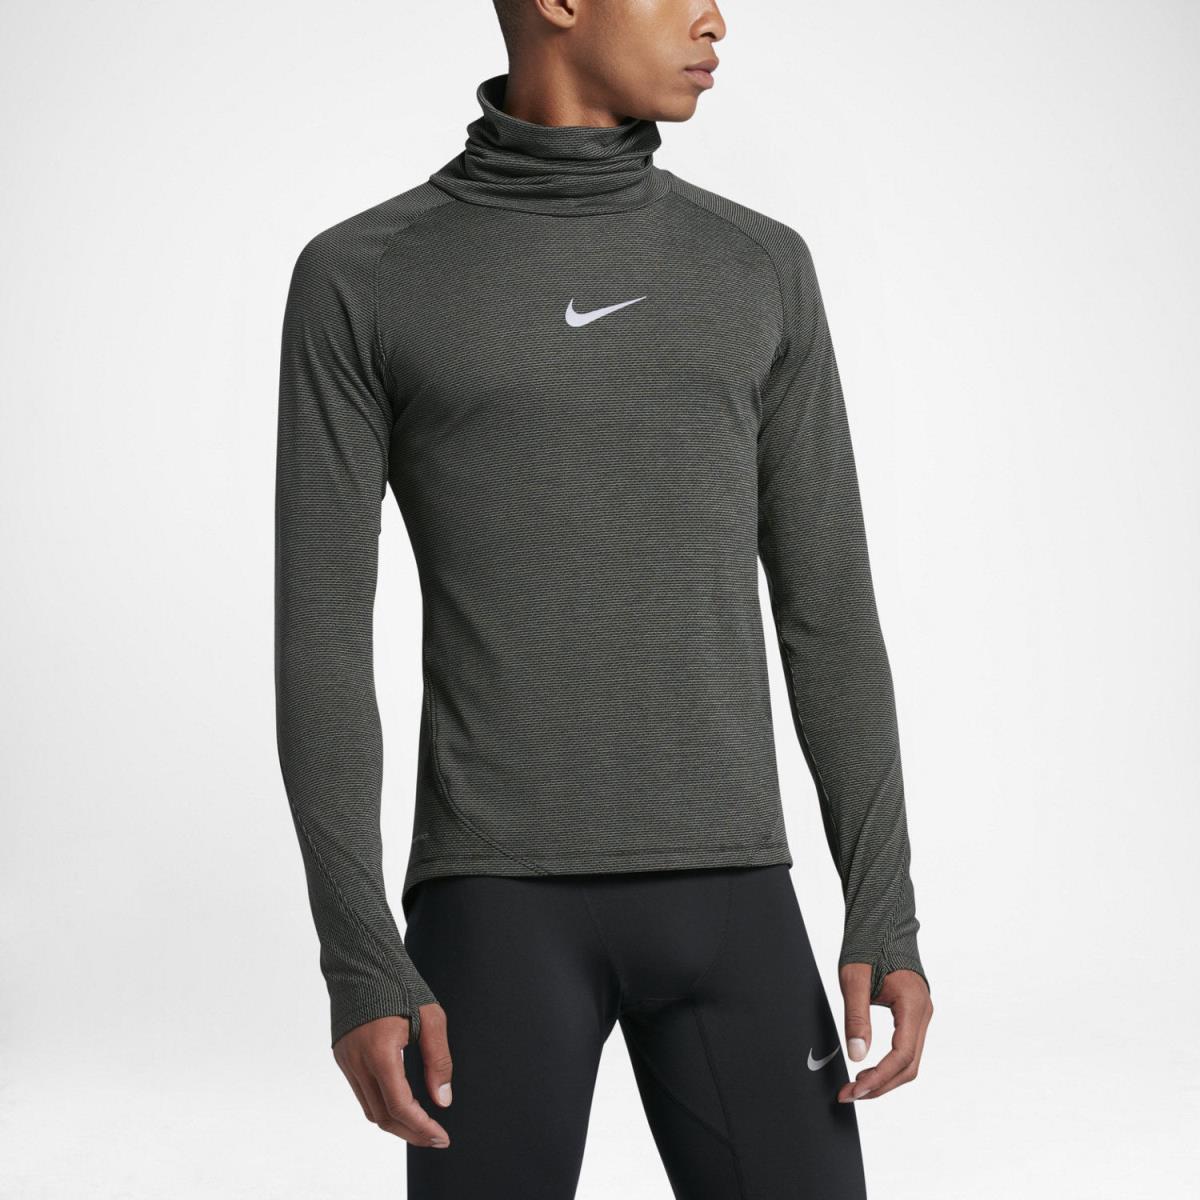 Nike Aeroreact Long Sleeve Cowl Running Shirt Sz M MD 800651 010 Retail